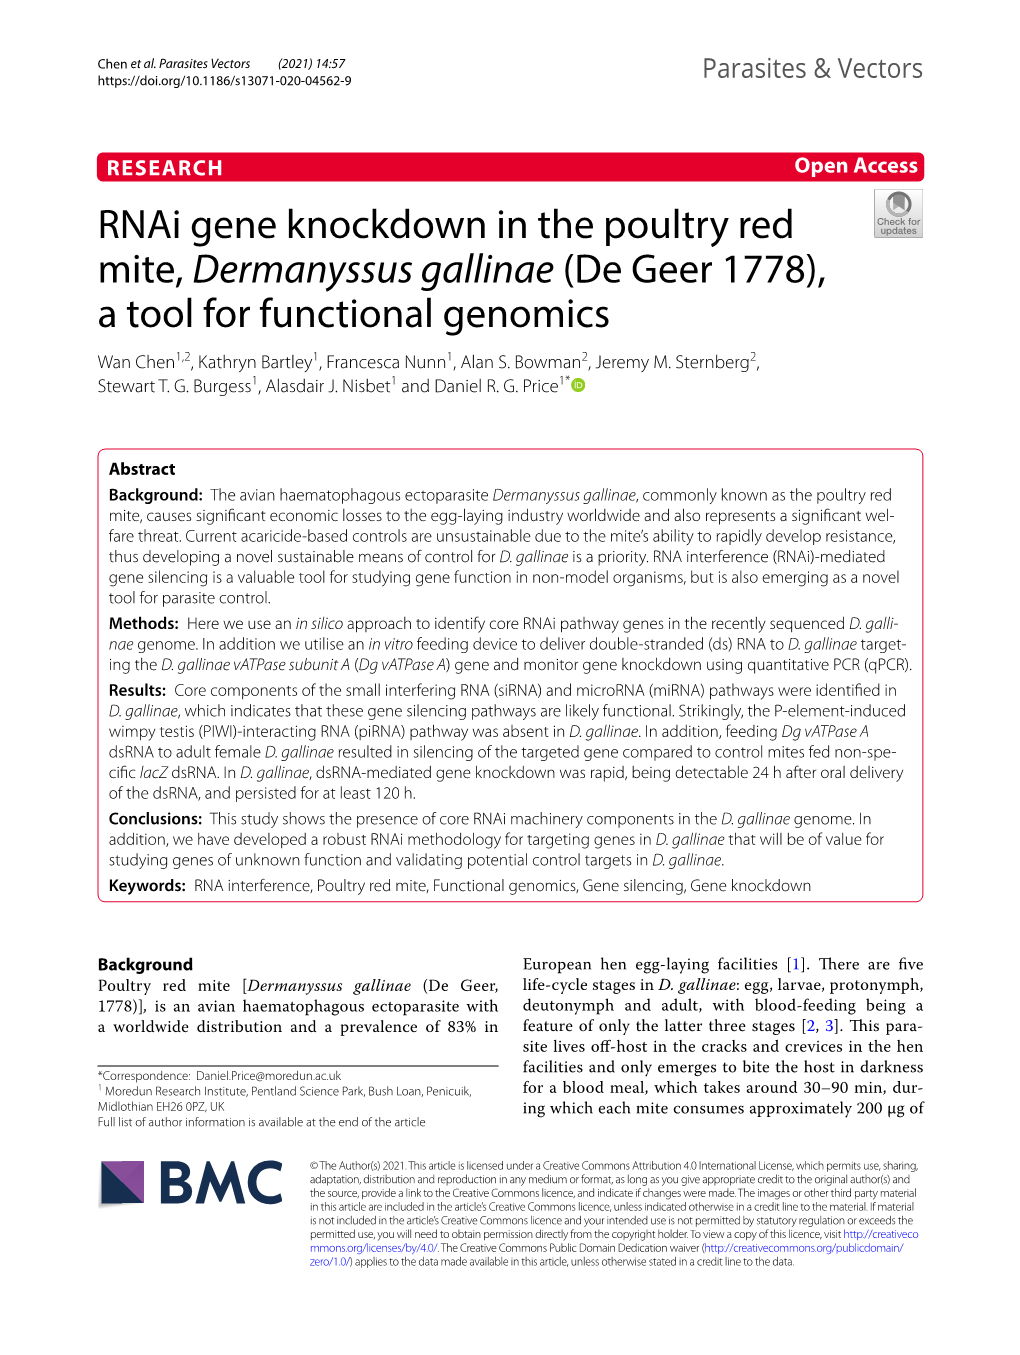 Rnai Gene Knockdown in the Poultry Red Mite